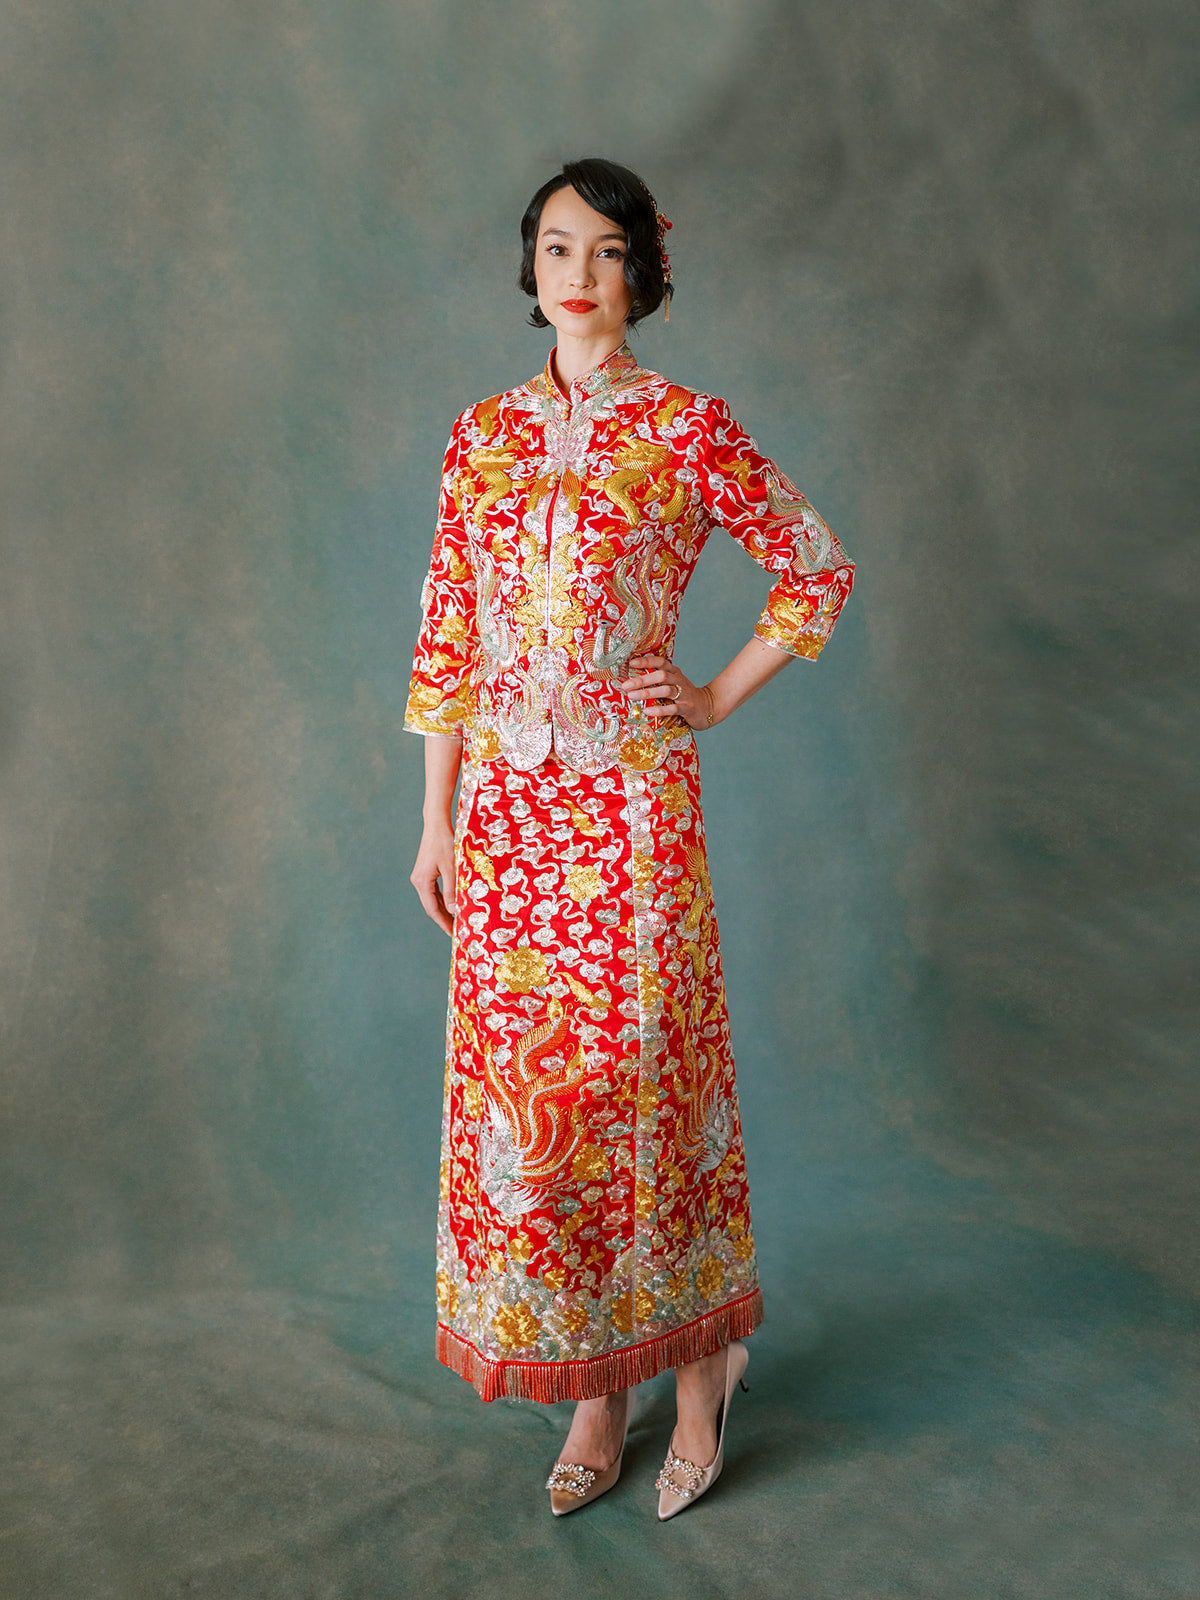 Asian Girl Women Dress Traditional Chinese Stock Photo 510568459 |  Shutterstock